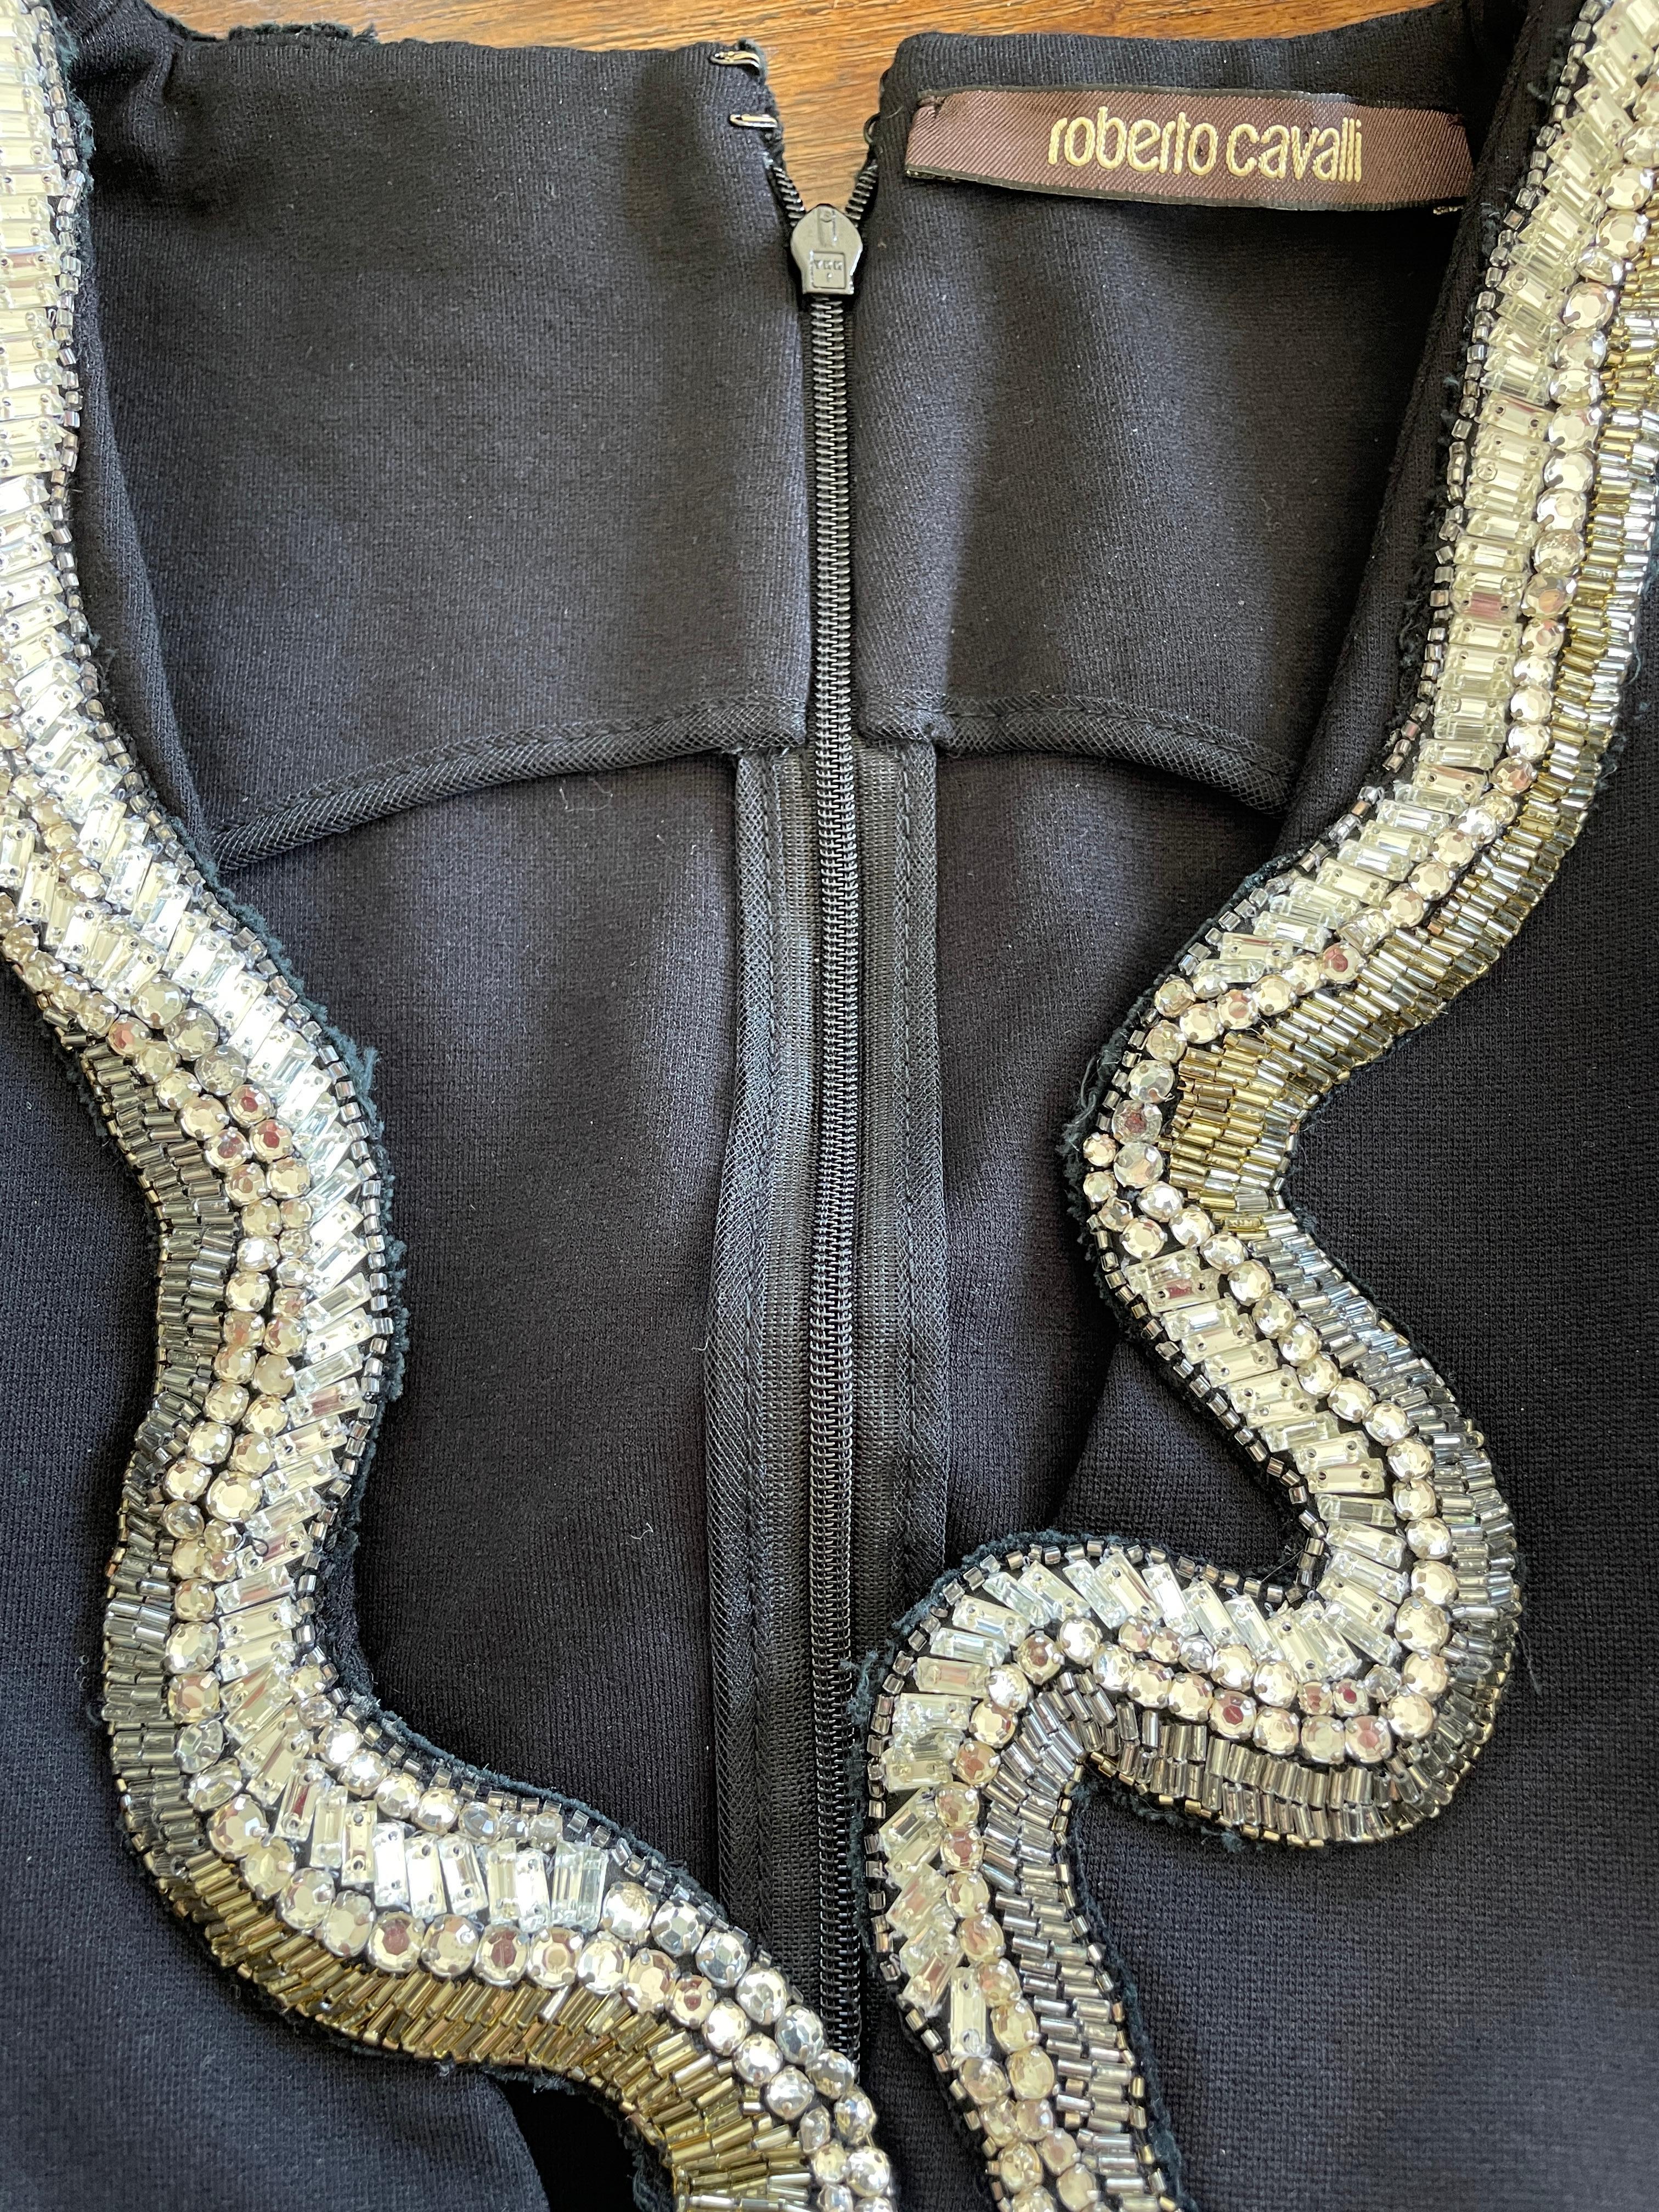 Roberto Cavalli Vintage Black Bodycon Dress w Crystal Embellished Snake Collar For Sale 5